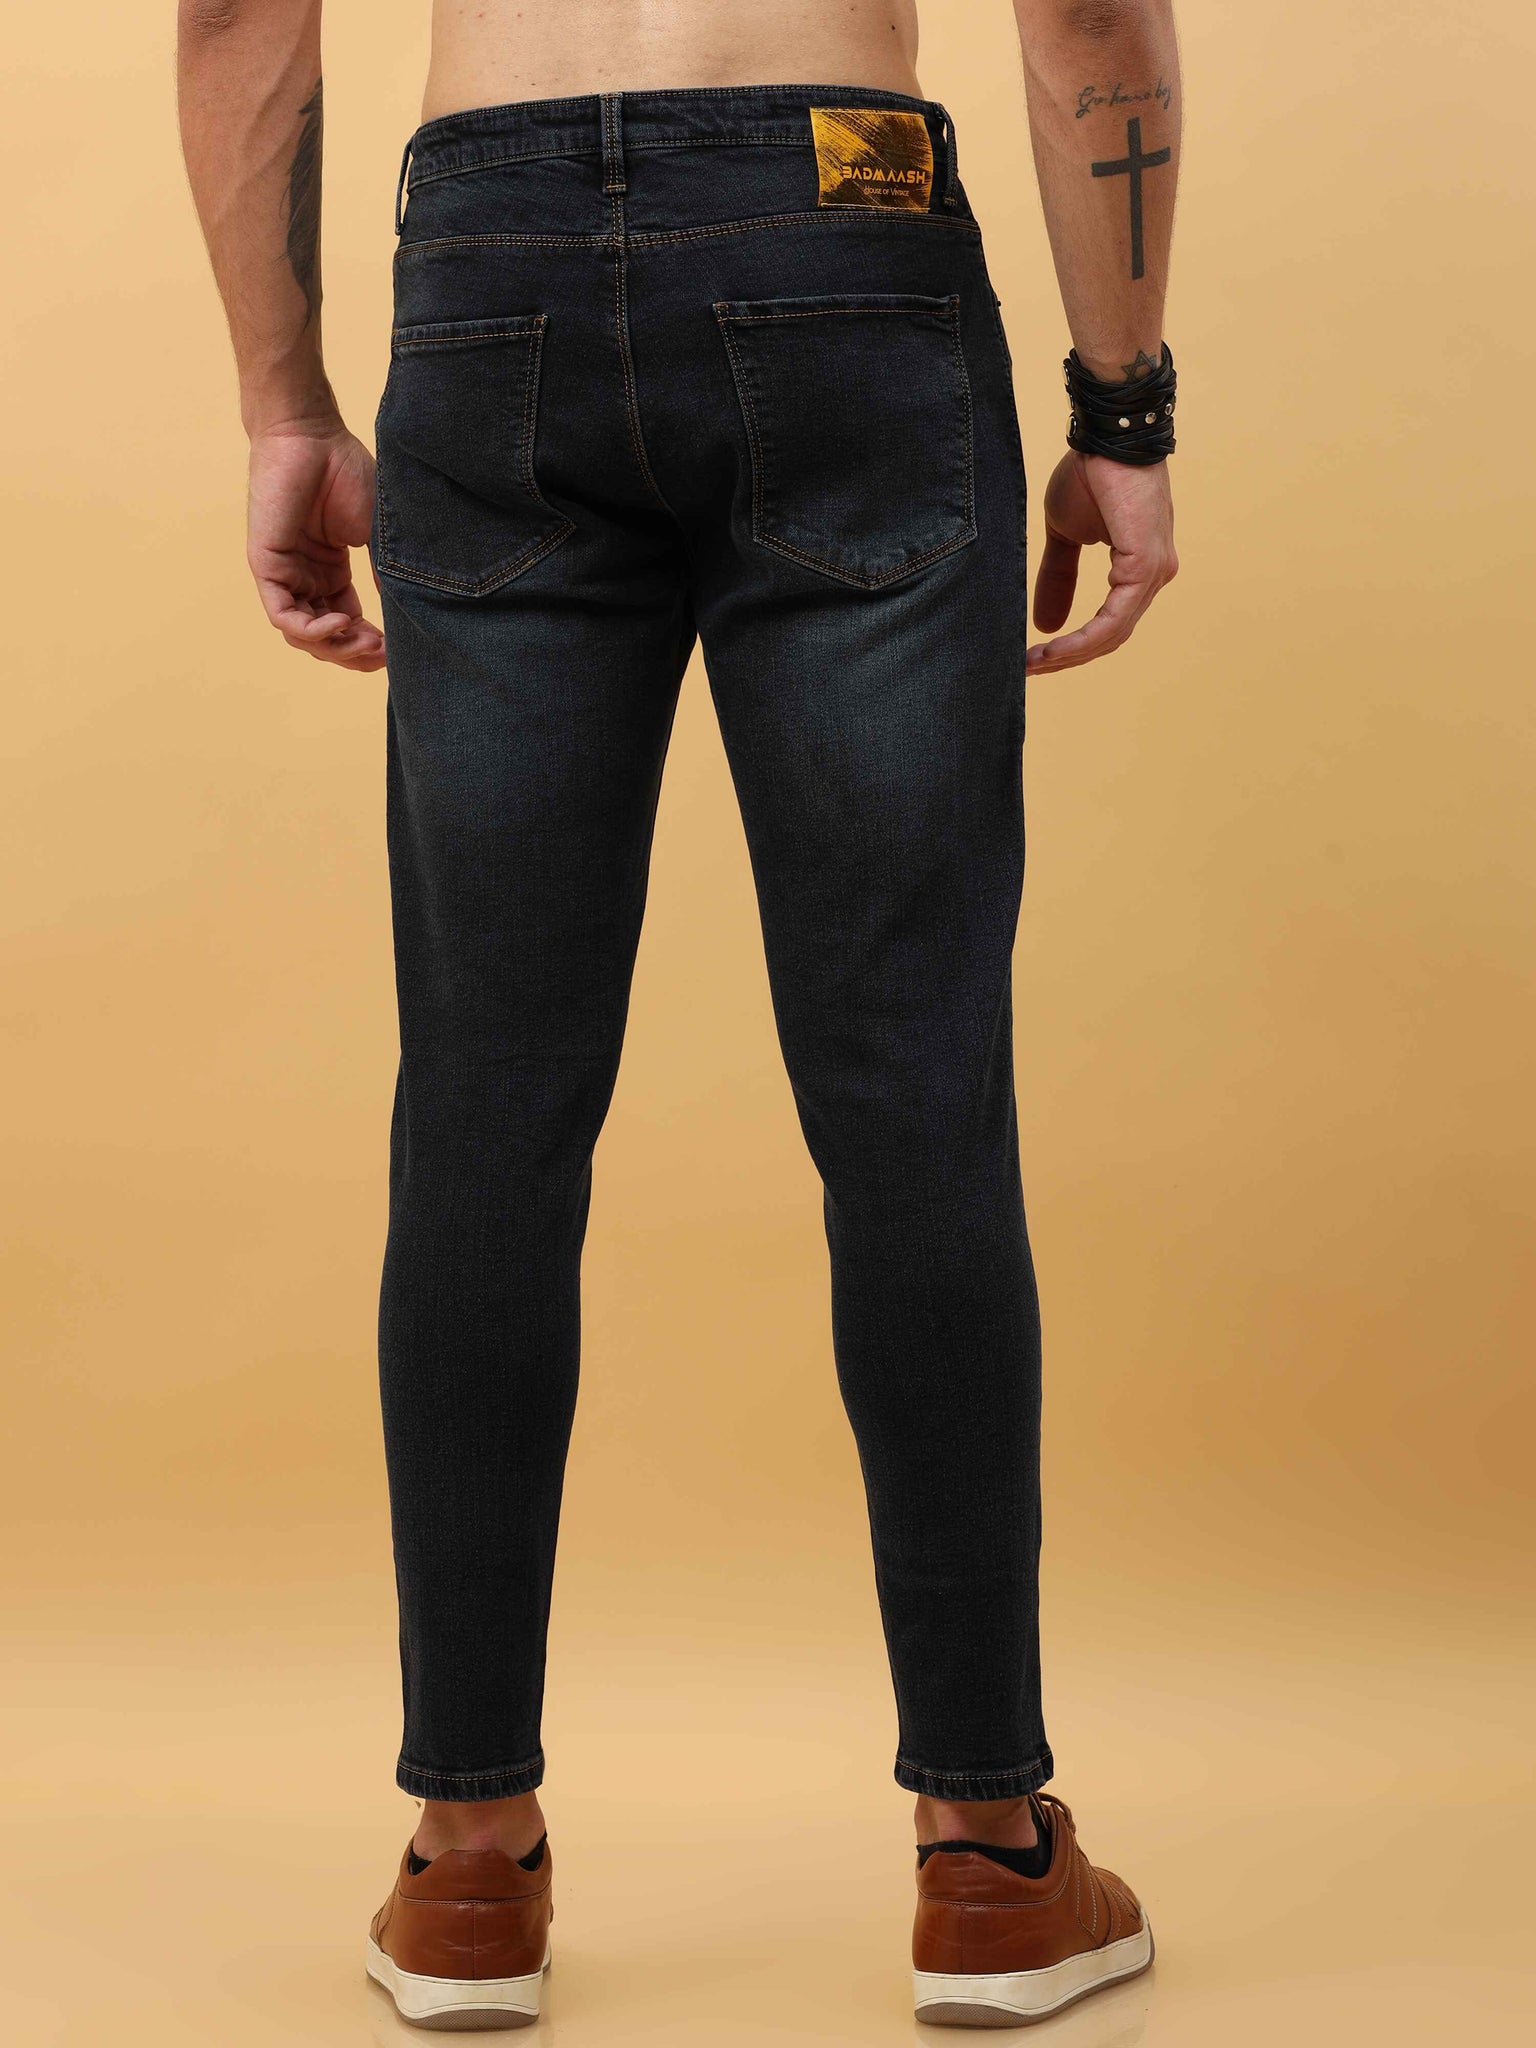 Sturdy Black Denim Jeans